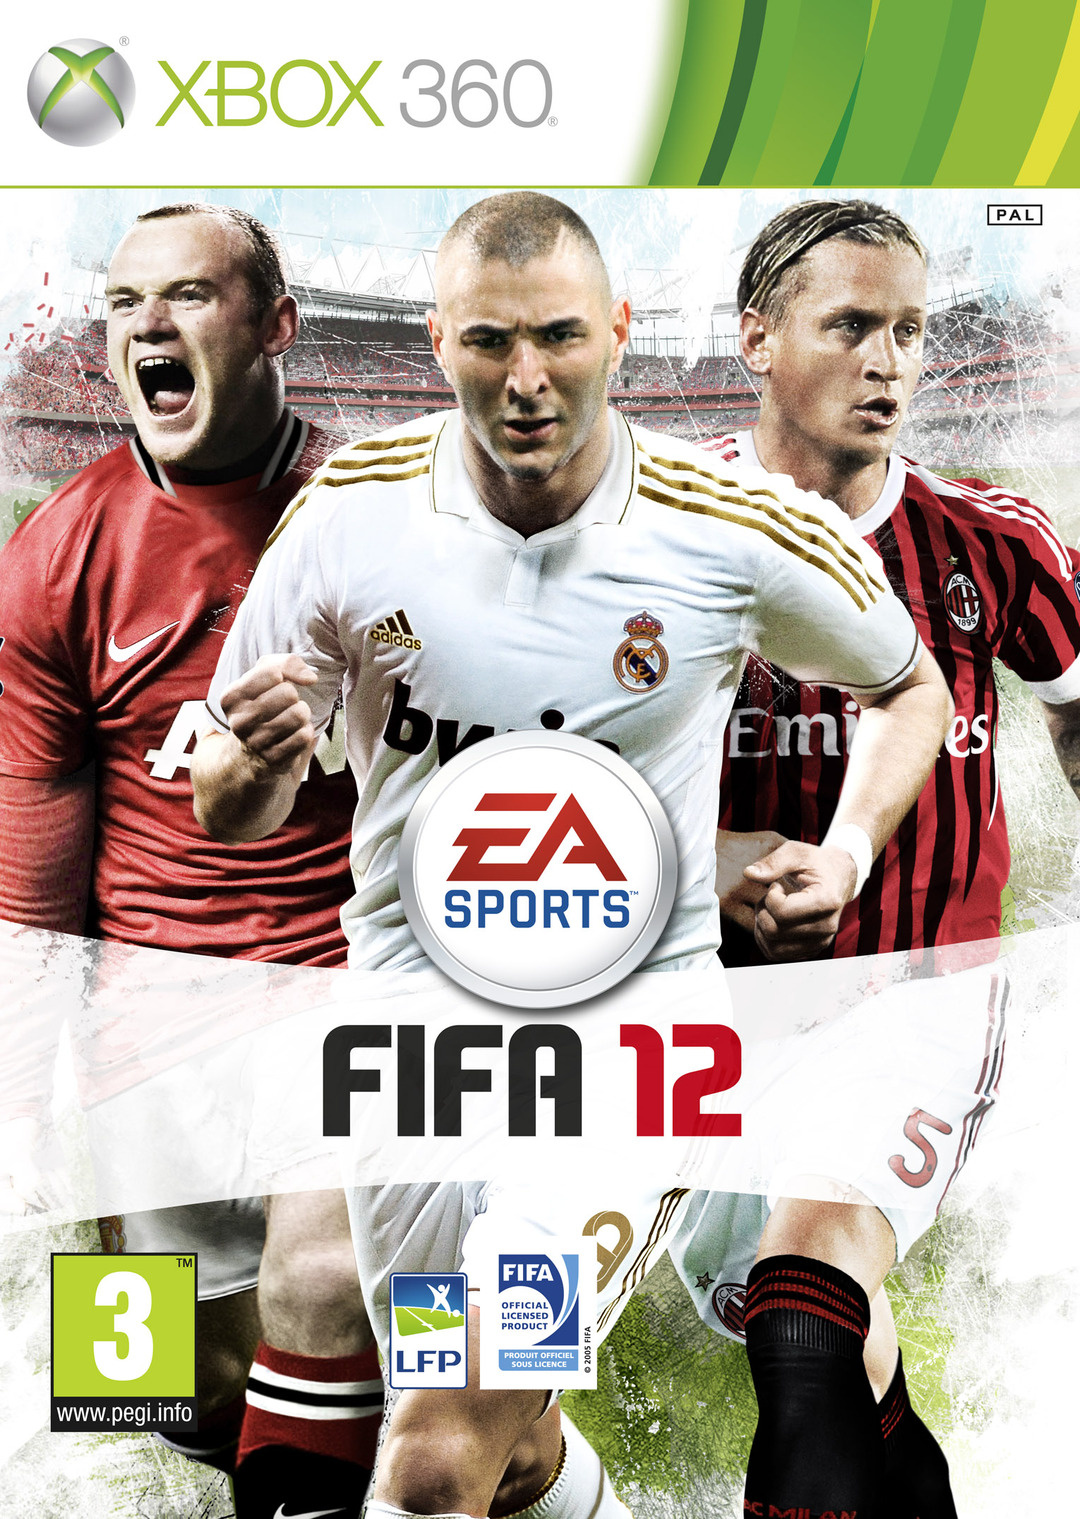 FIFA 12 -XBOX360 (Exclue) [FS] [US] [WU] Jaquette-fifa-12-xbox-360-cover-avant-g-1311972220